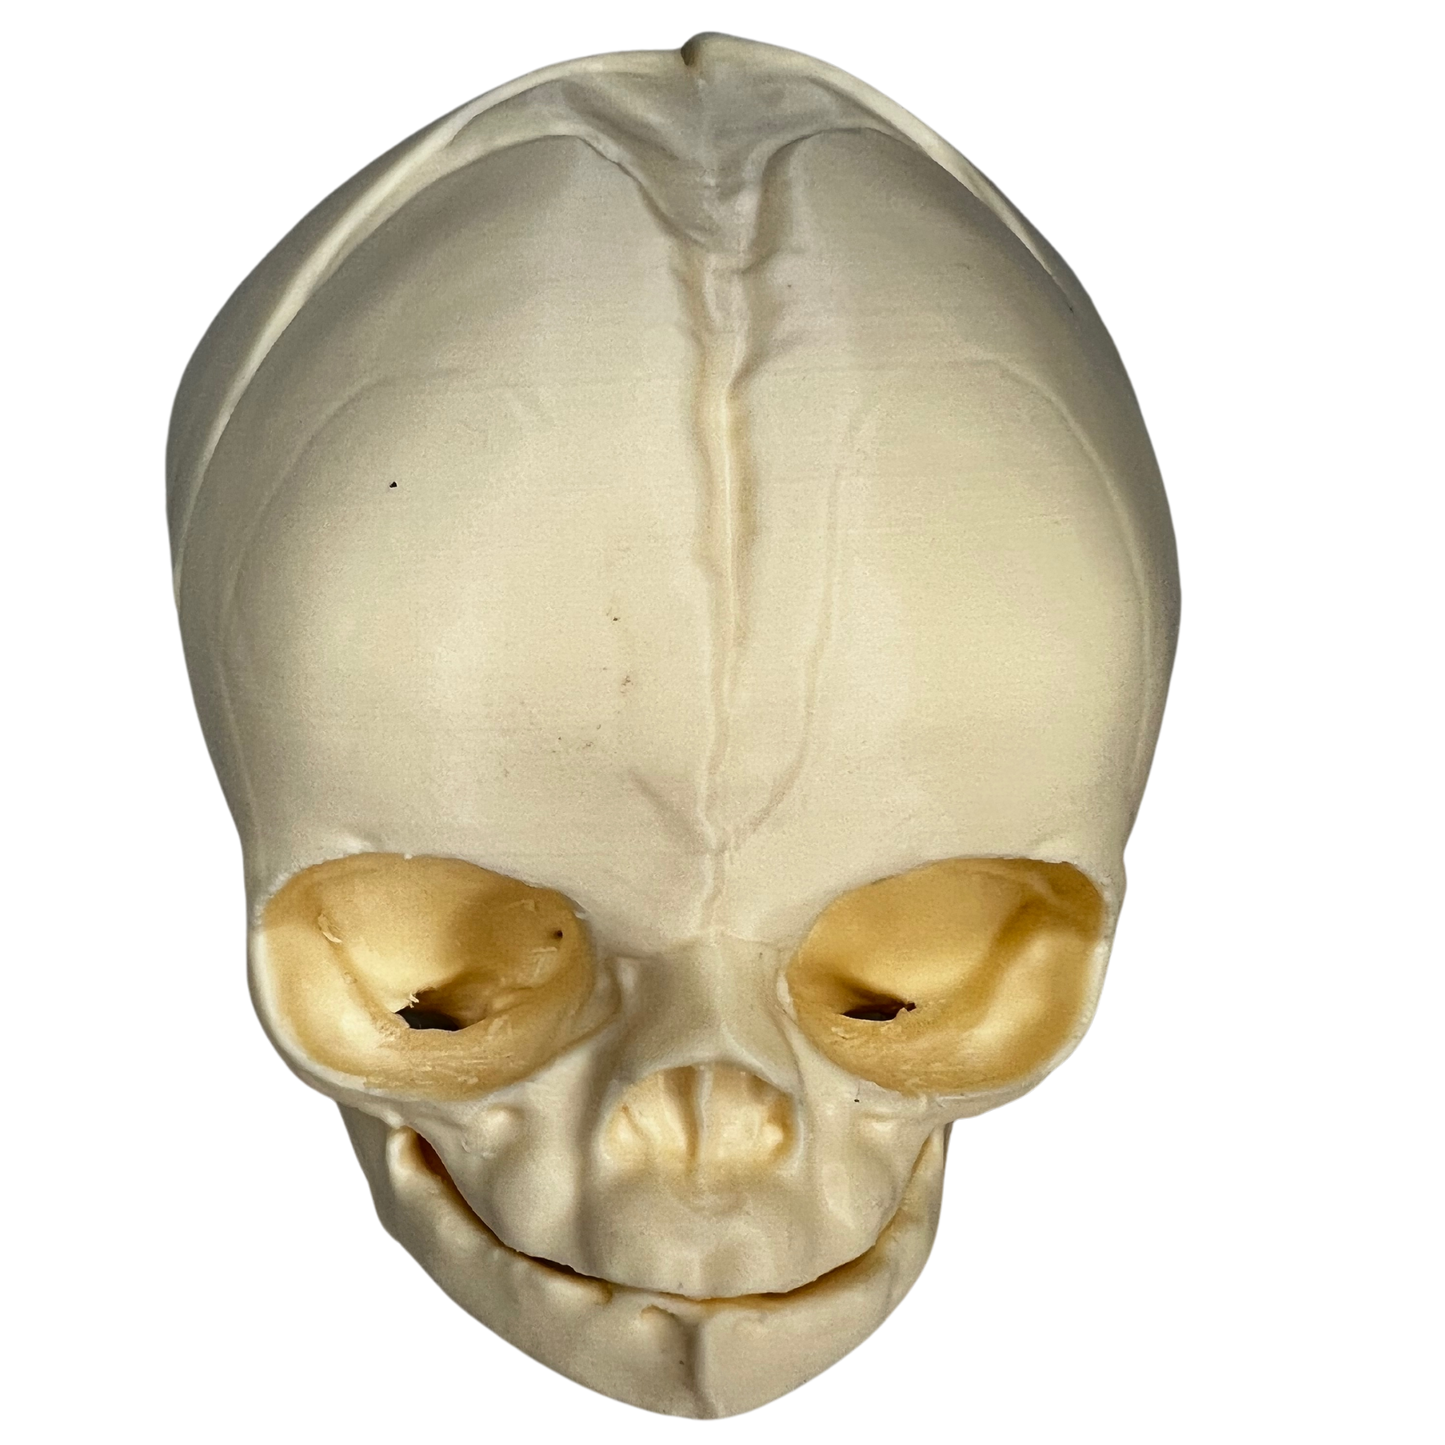 full term 3D printed model of a fetal skull for prenatal educators